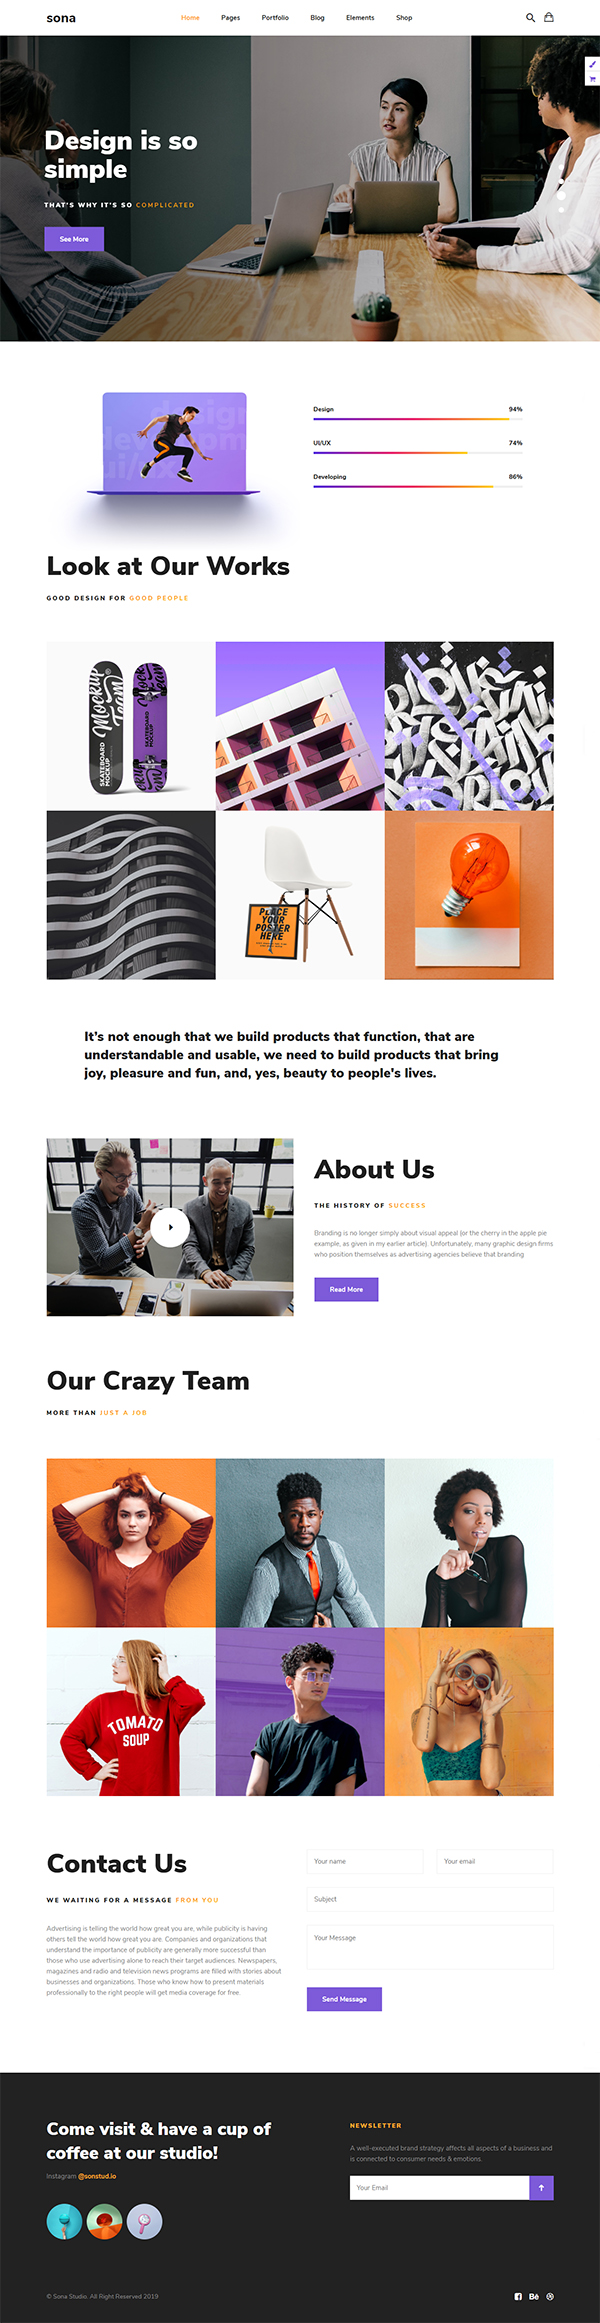 Sona - Web Design and Digital Marketing Agency WordPress